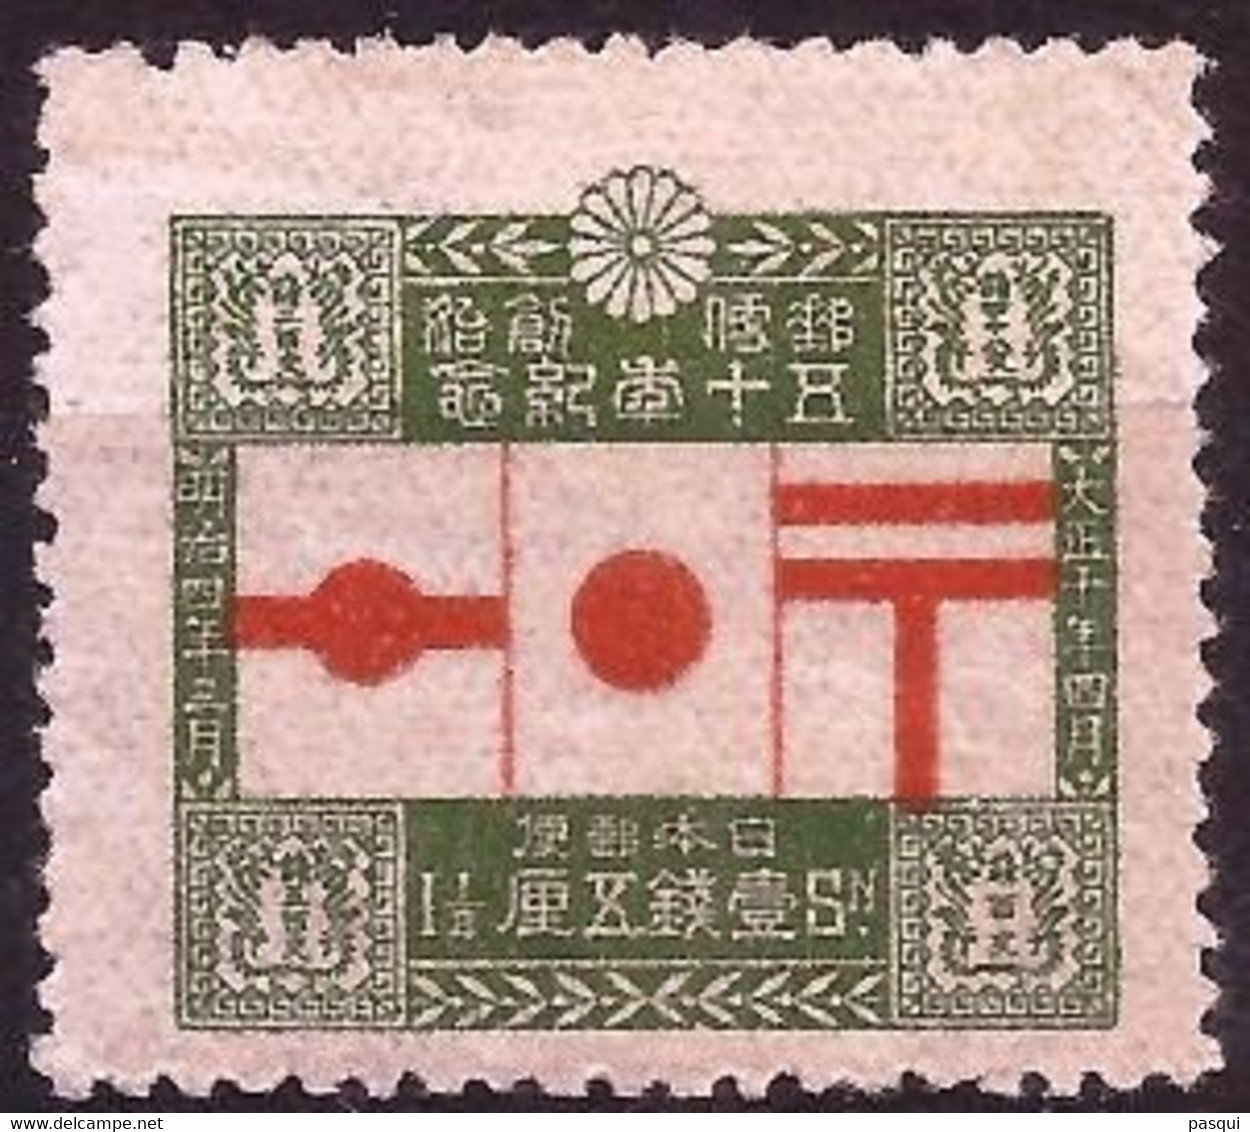 JAPON - Fx. 2900 A - Yv. 162 - 50º Aniversario Del Correo - 1921 - * - Unused Stamps